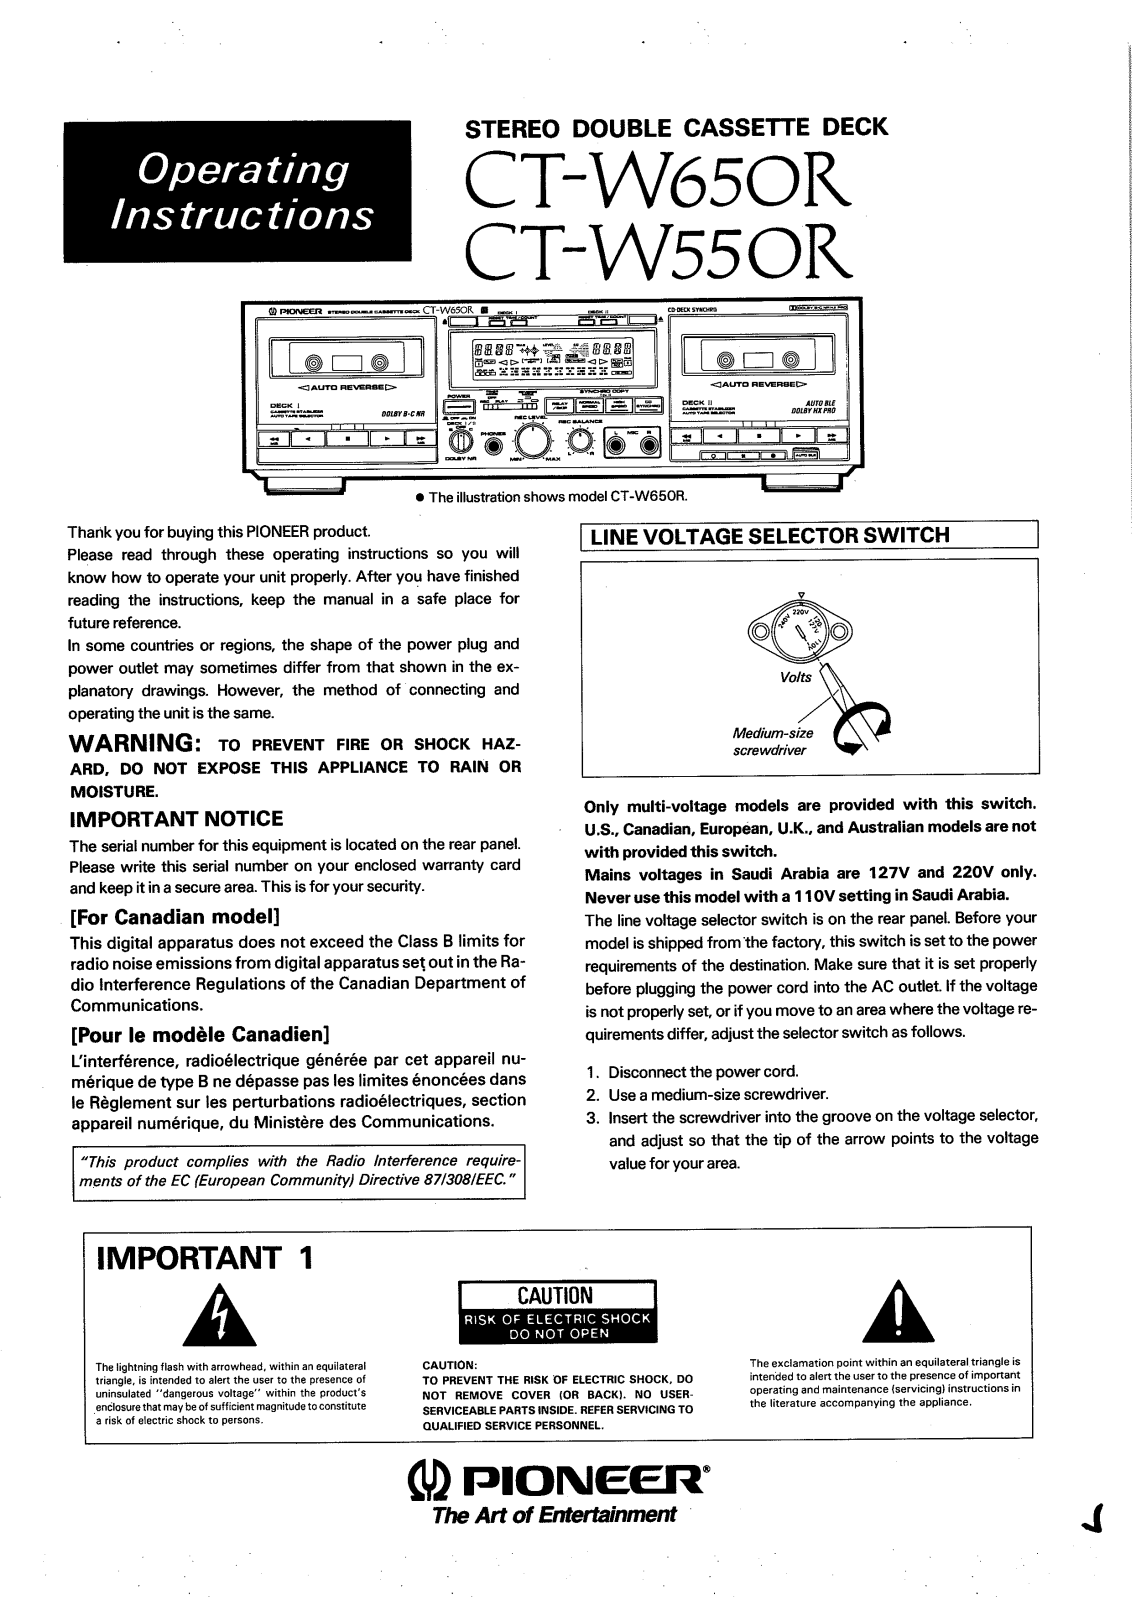 Pioneer CT-W550R, CT-W650R Manual